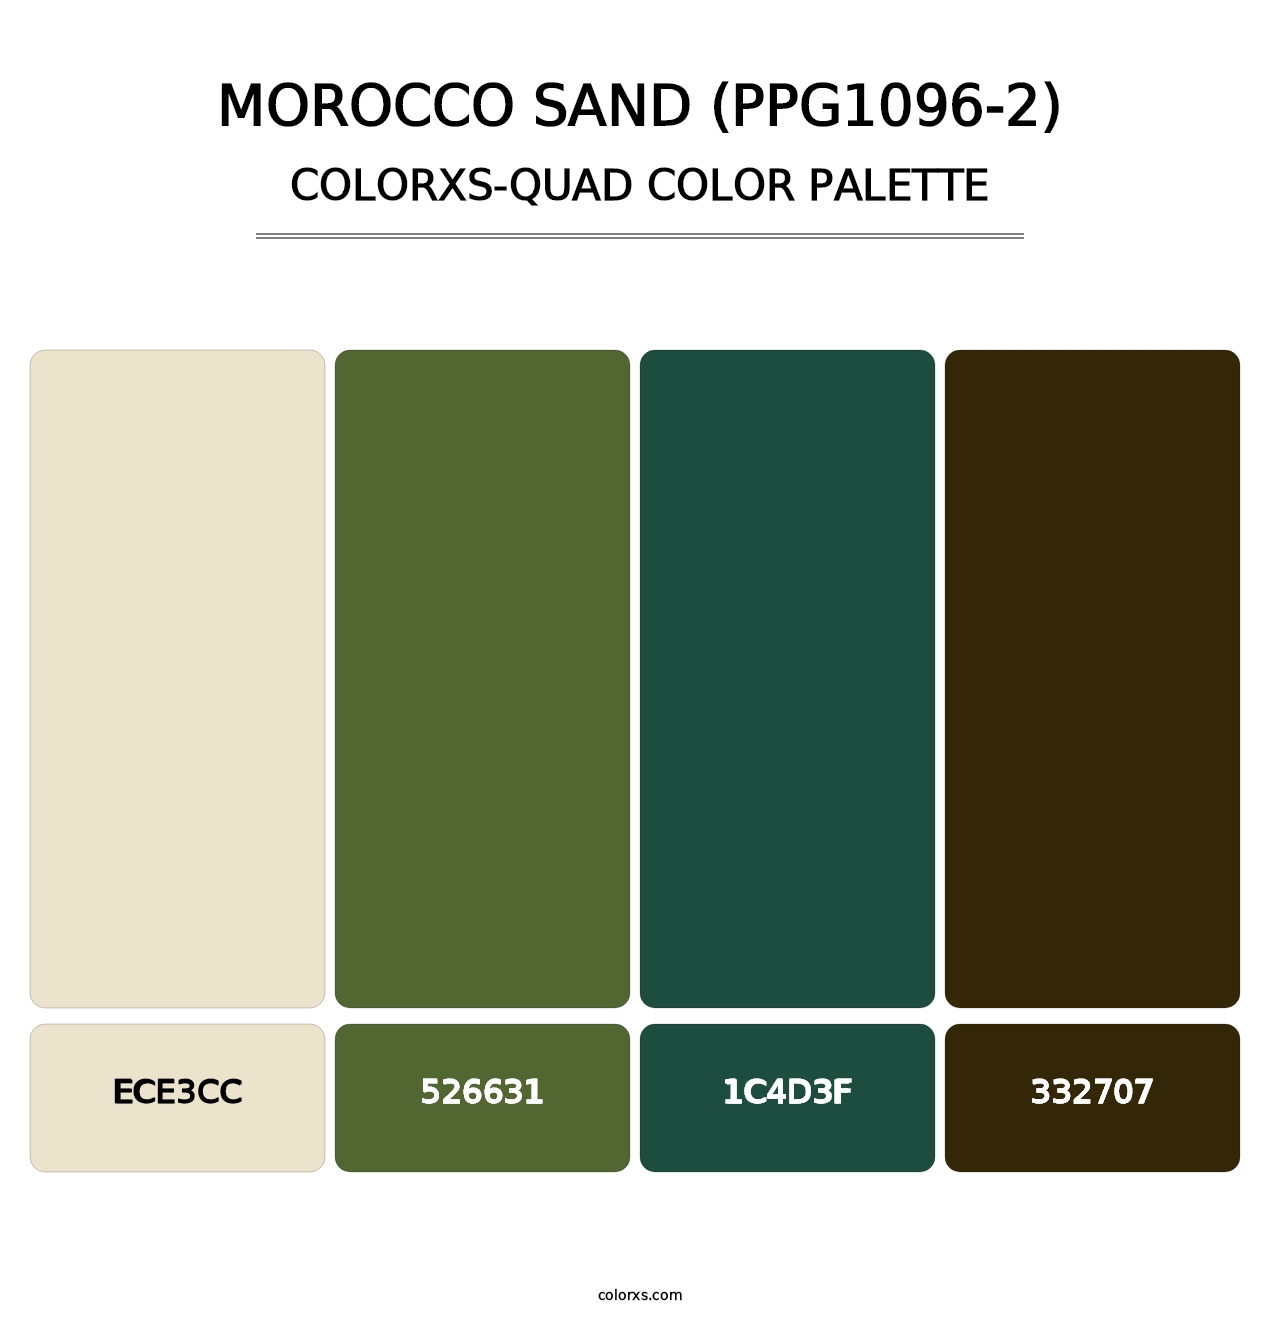 Morocco Sand (PPG1096-2) - Colorxs Quad Palette